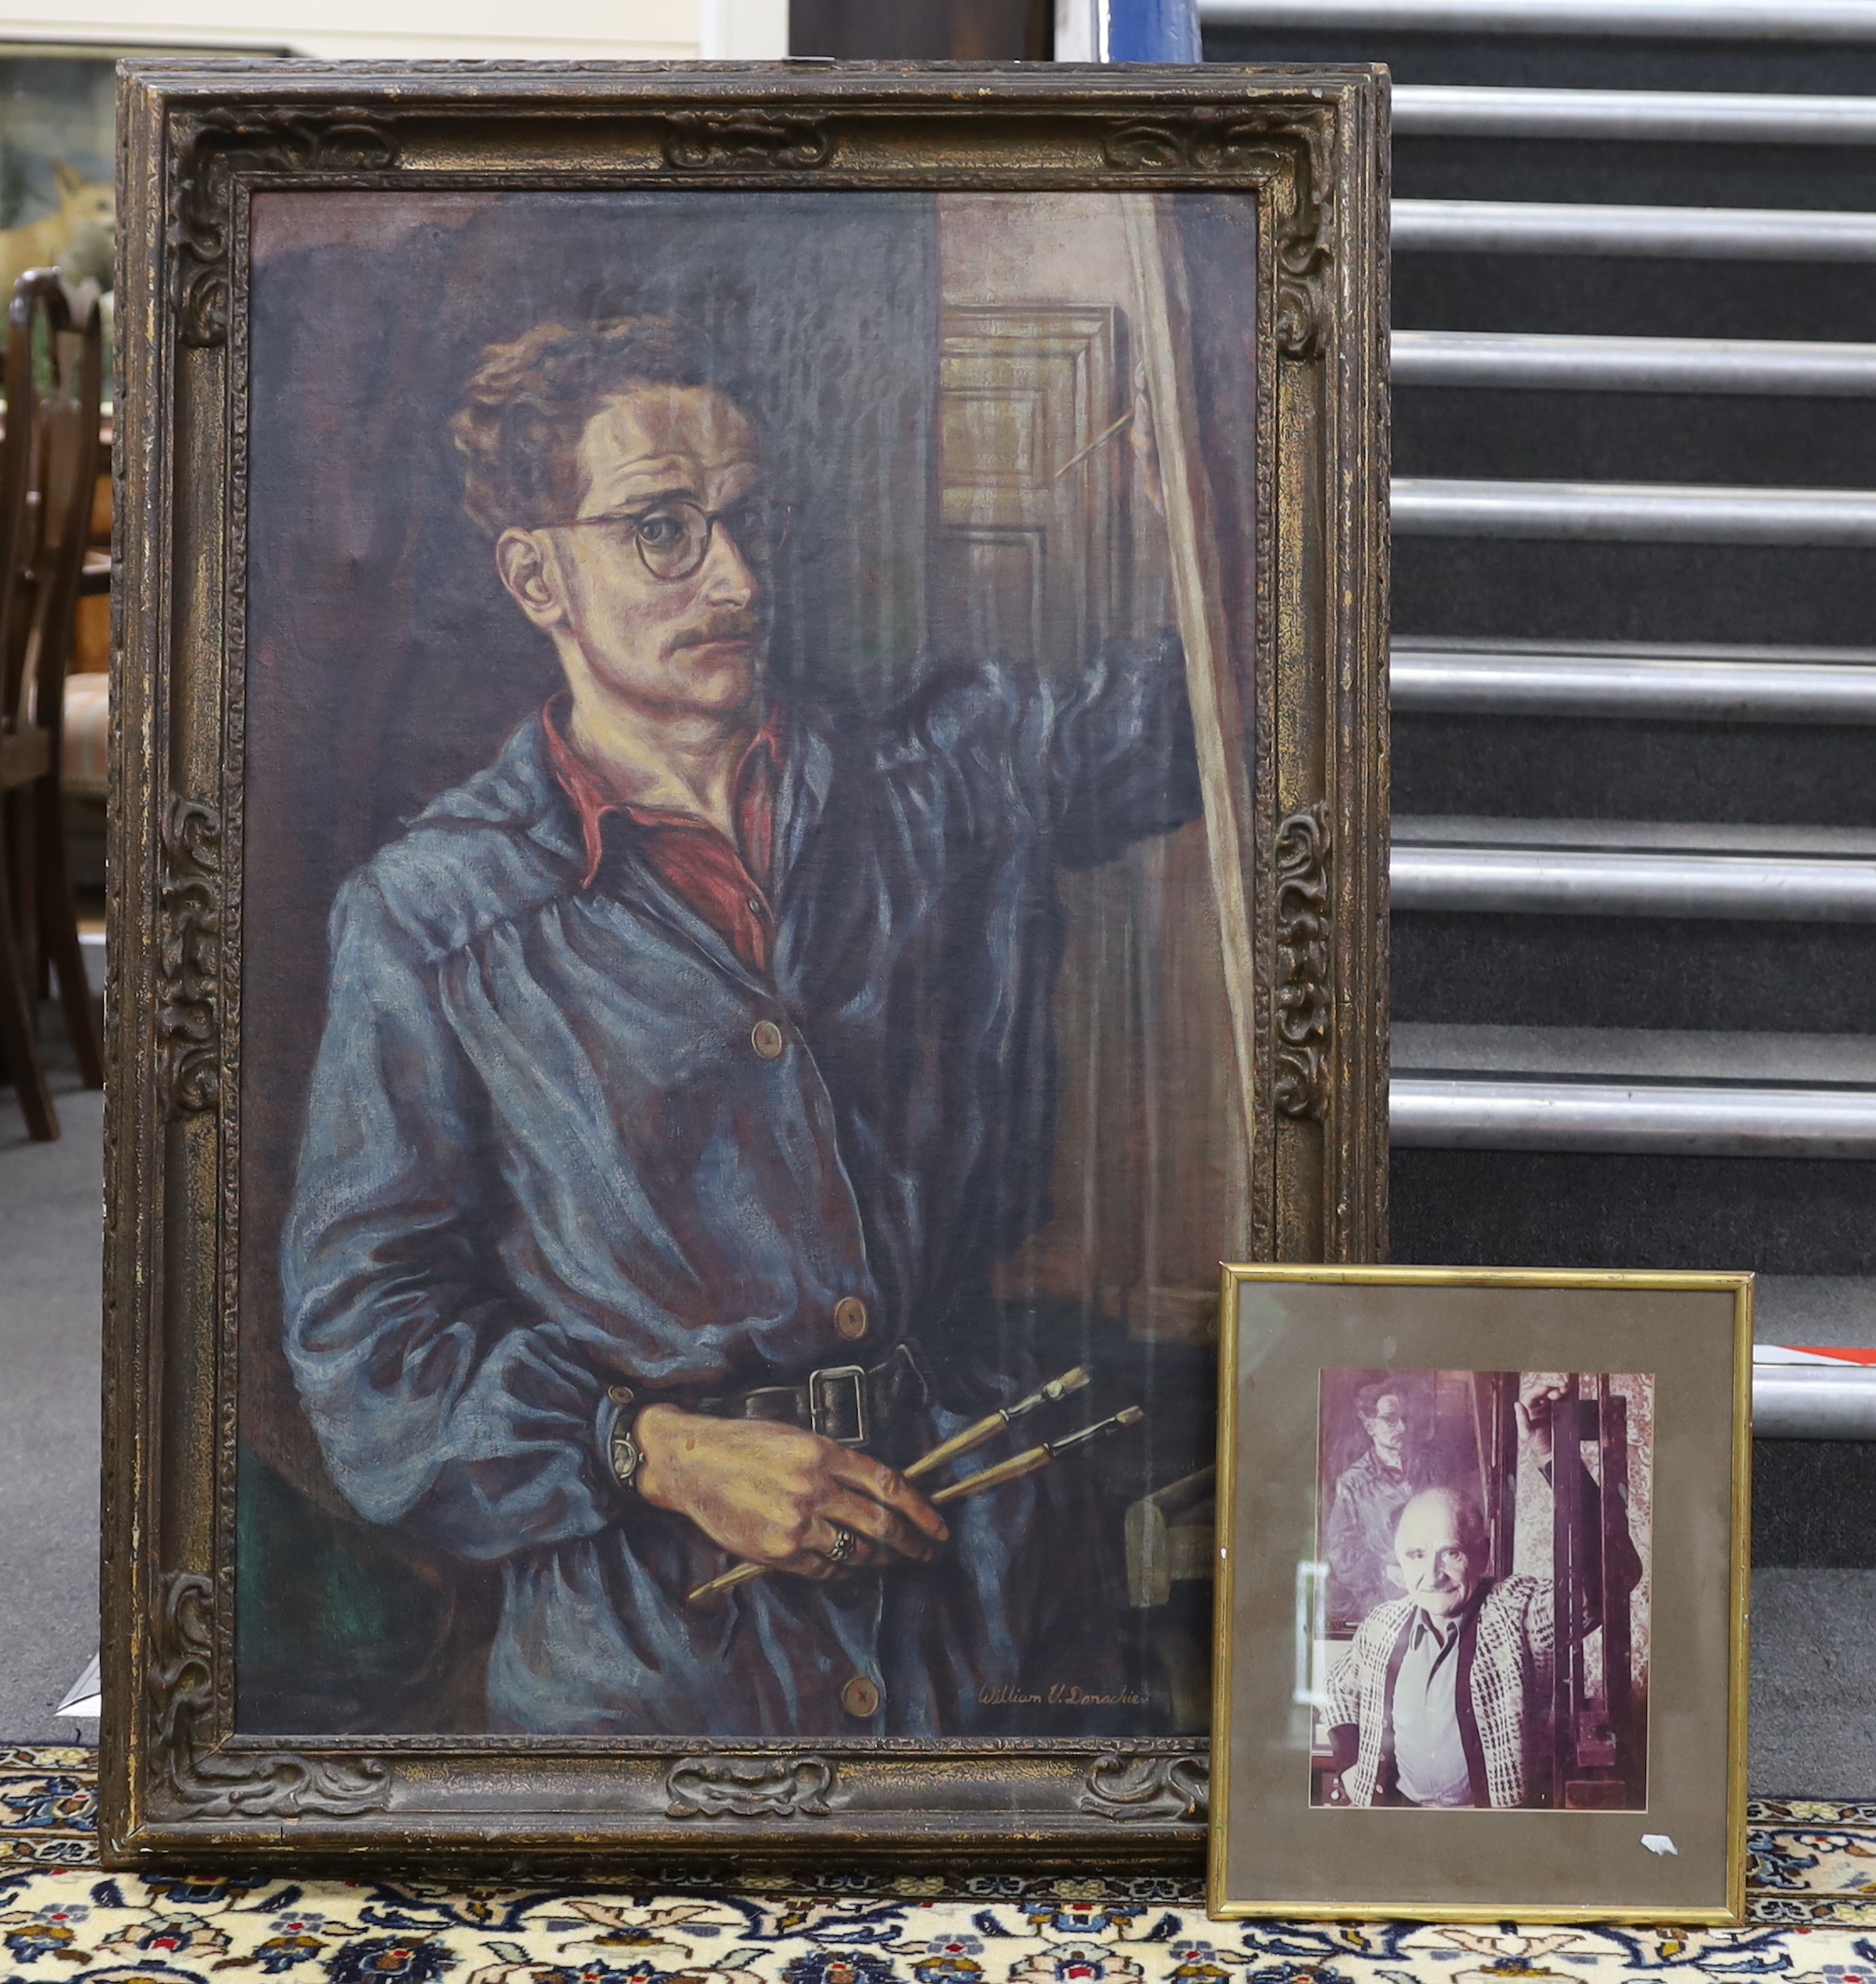 William Donachie (20th C.), oil on canvas, 'Auto portrait', 90 x 59cm